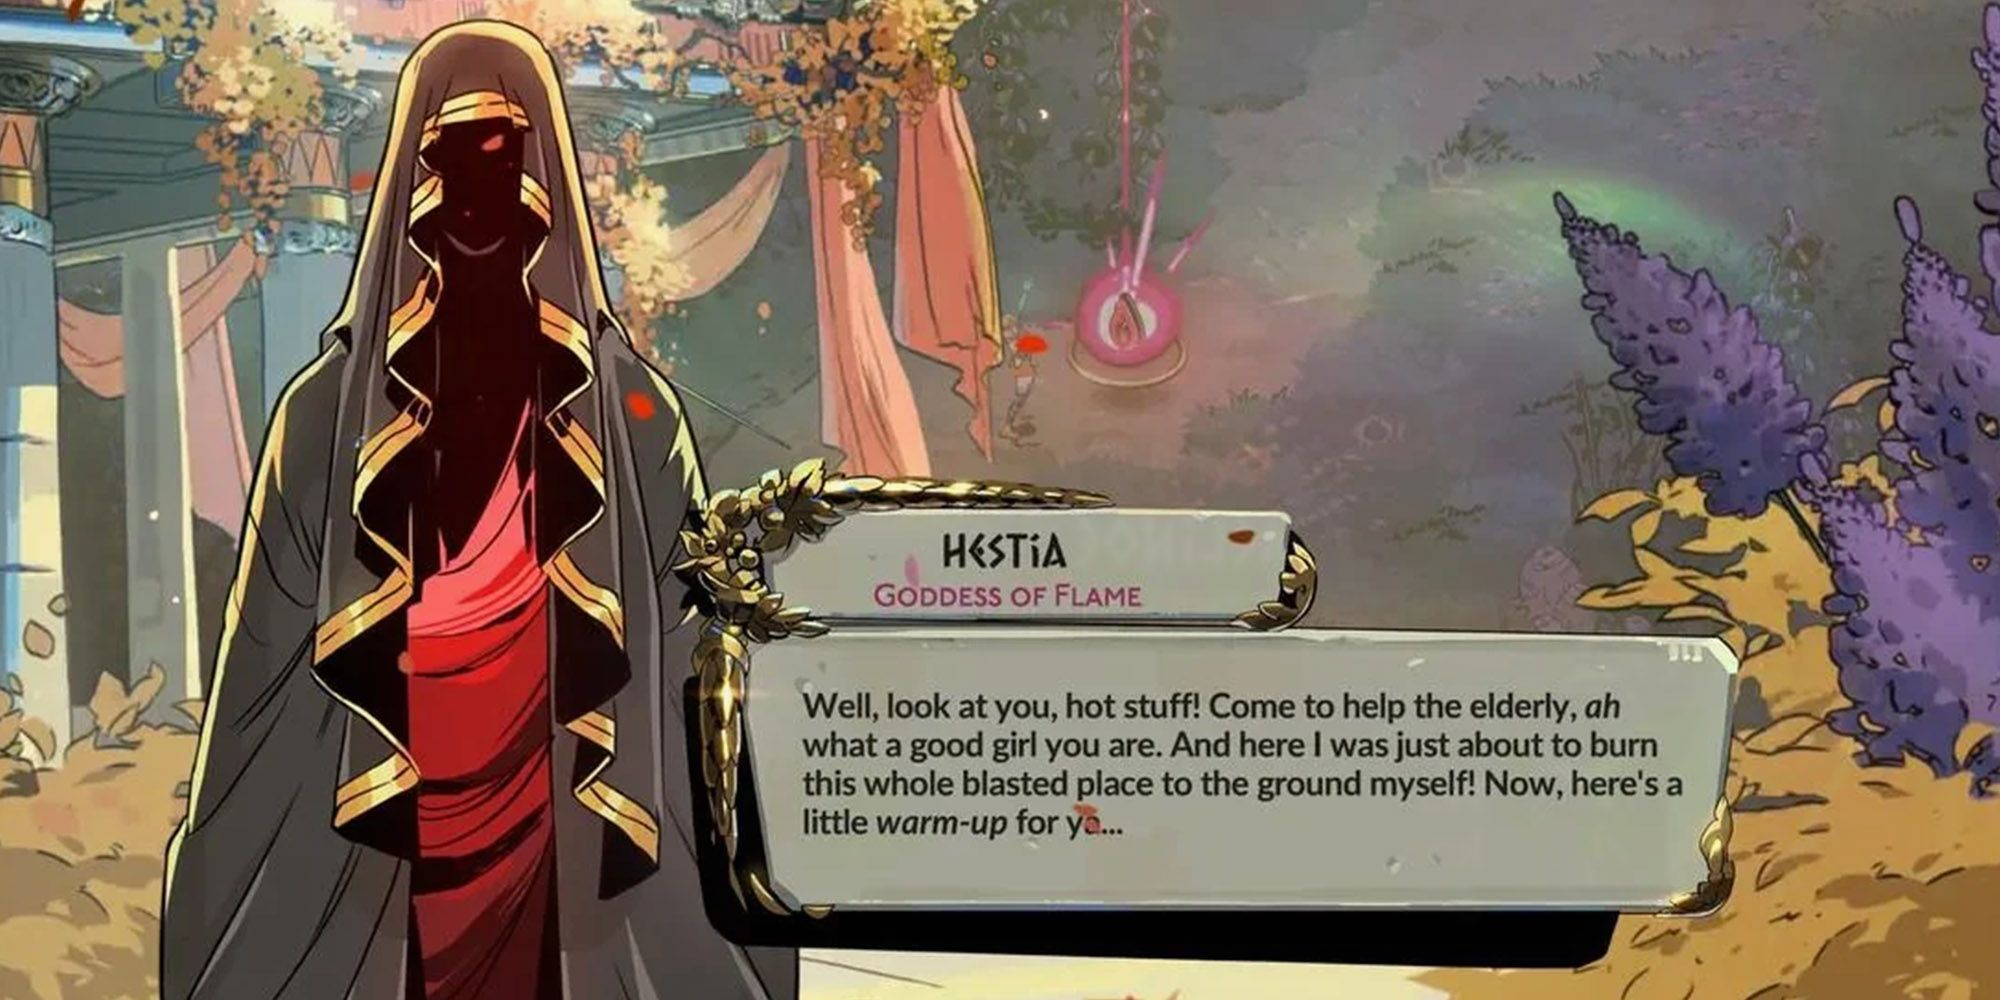 Hades 2 - Hestia